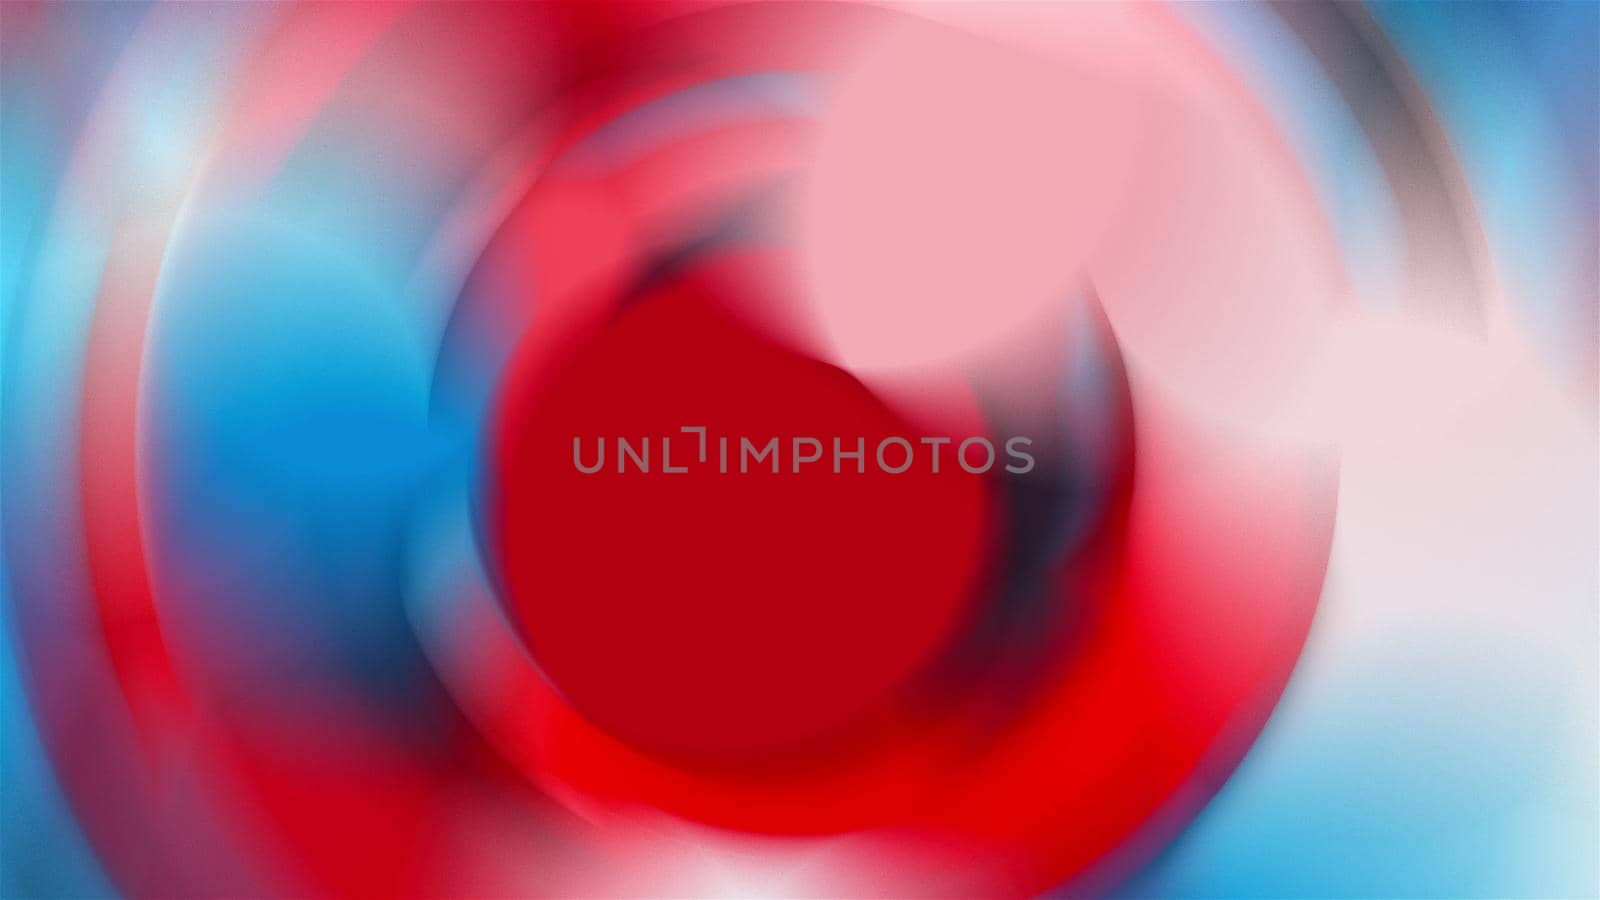 Radial blur by nolimit046